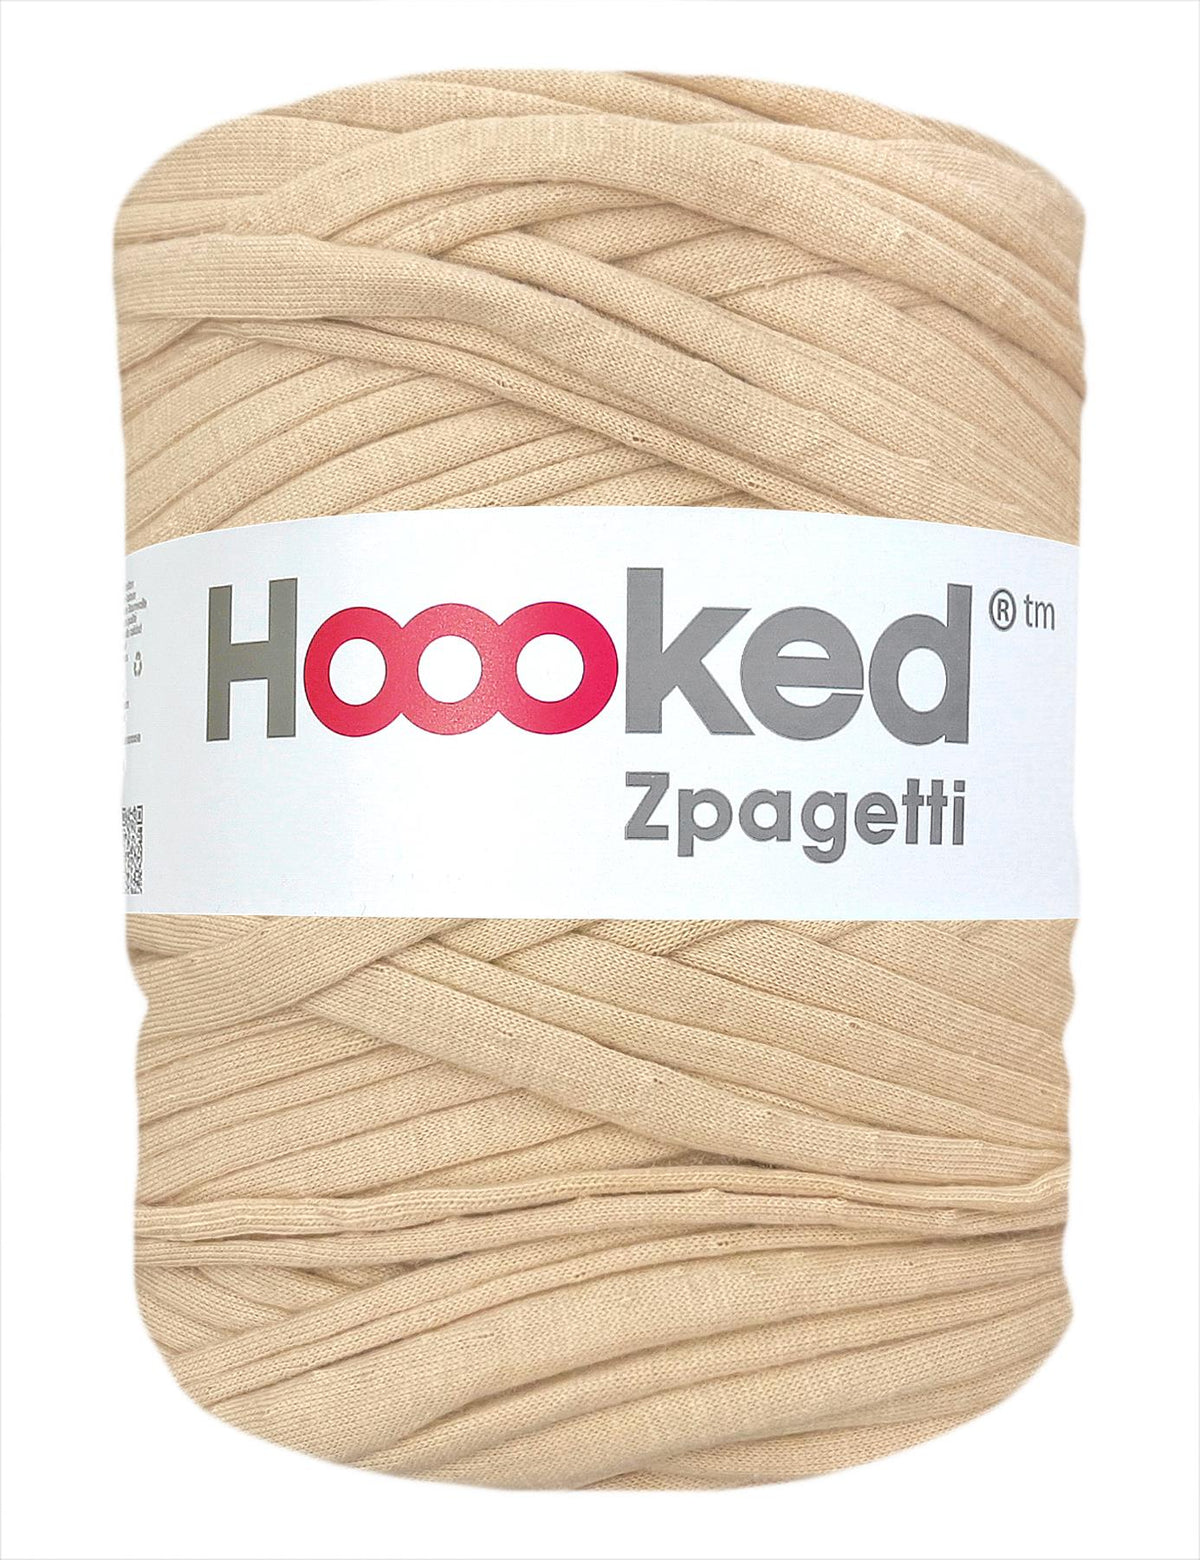  T-Shirt Yarn Fettuccini Zpagetti Ball, 3-5 mm Tshirt Yarn for  Crochet Knitting, Mask Ear Ties, T Yarn Organic Cotton, Macrame T-Yarn,  Jersey Yarn - Orange